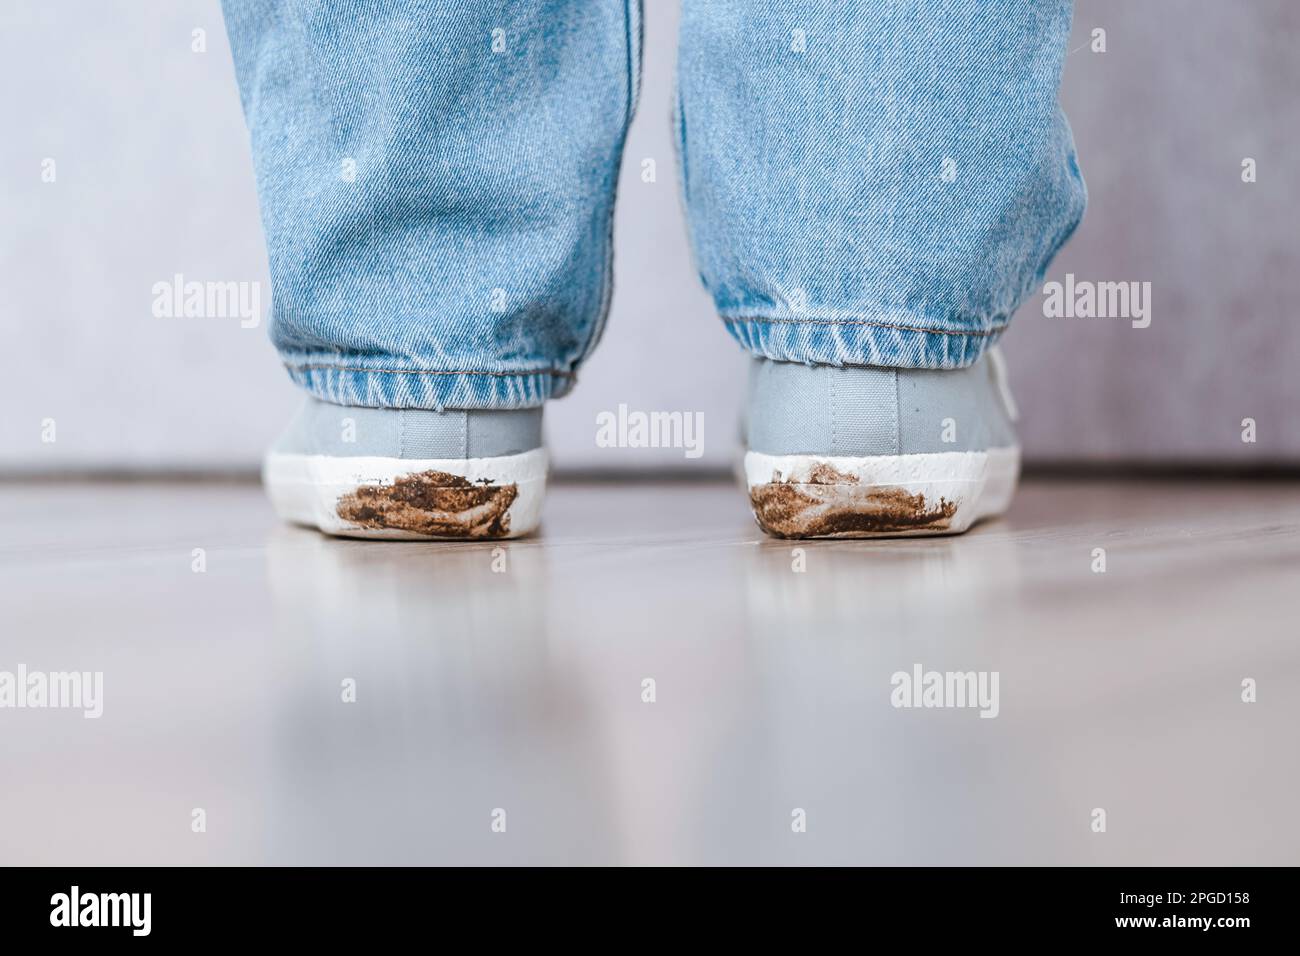 Muddy foodprint on the heels of shoes. Mud footprint indoors on floor Stock Photo